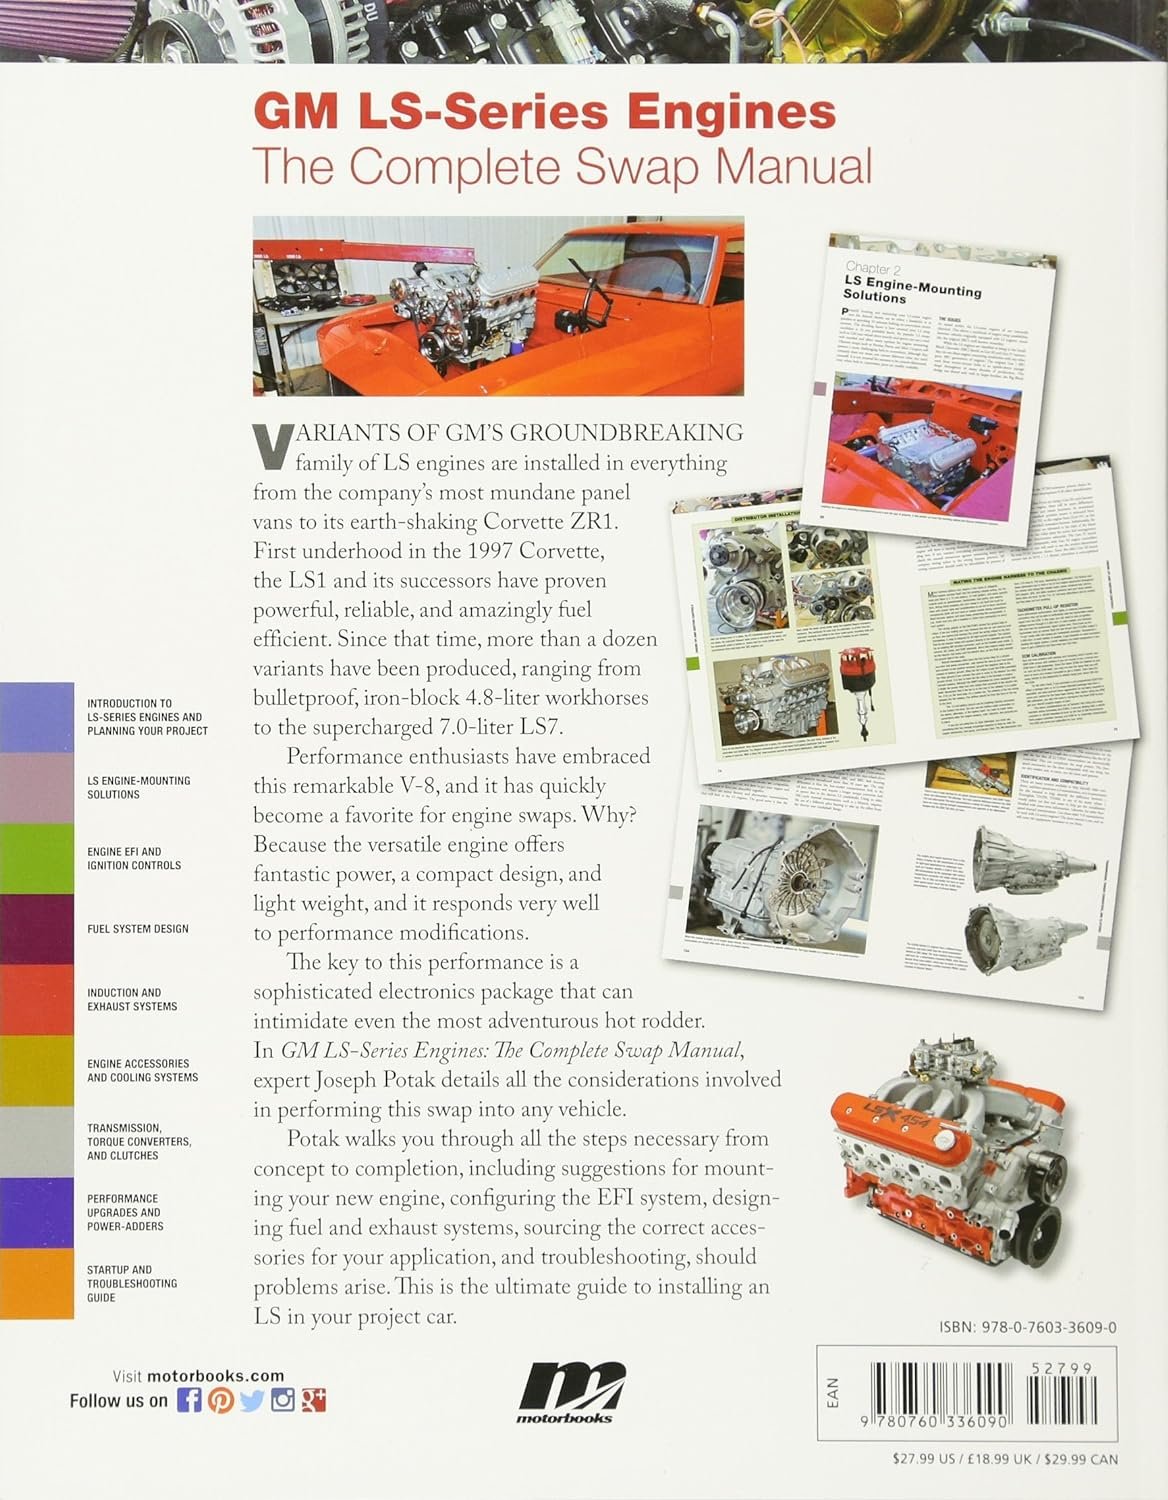 GM LS-Series Engines: The Complete Swap Manual (Motorbooks Workshop)